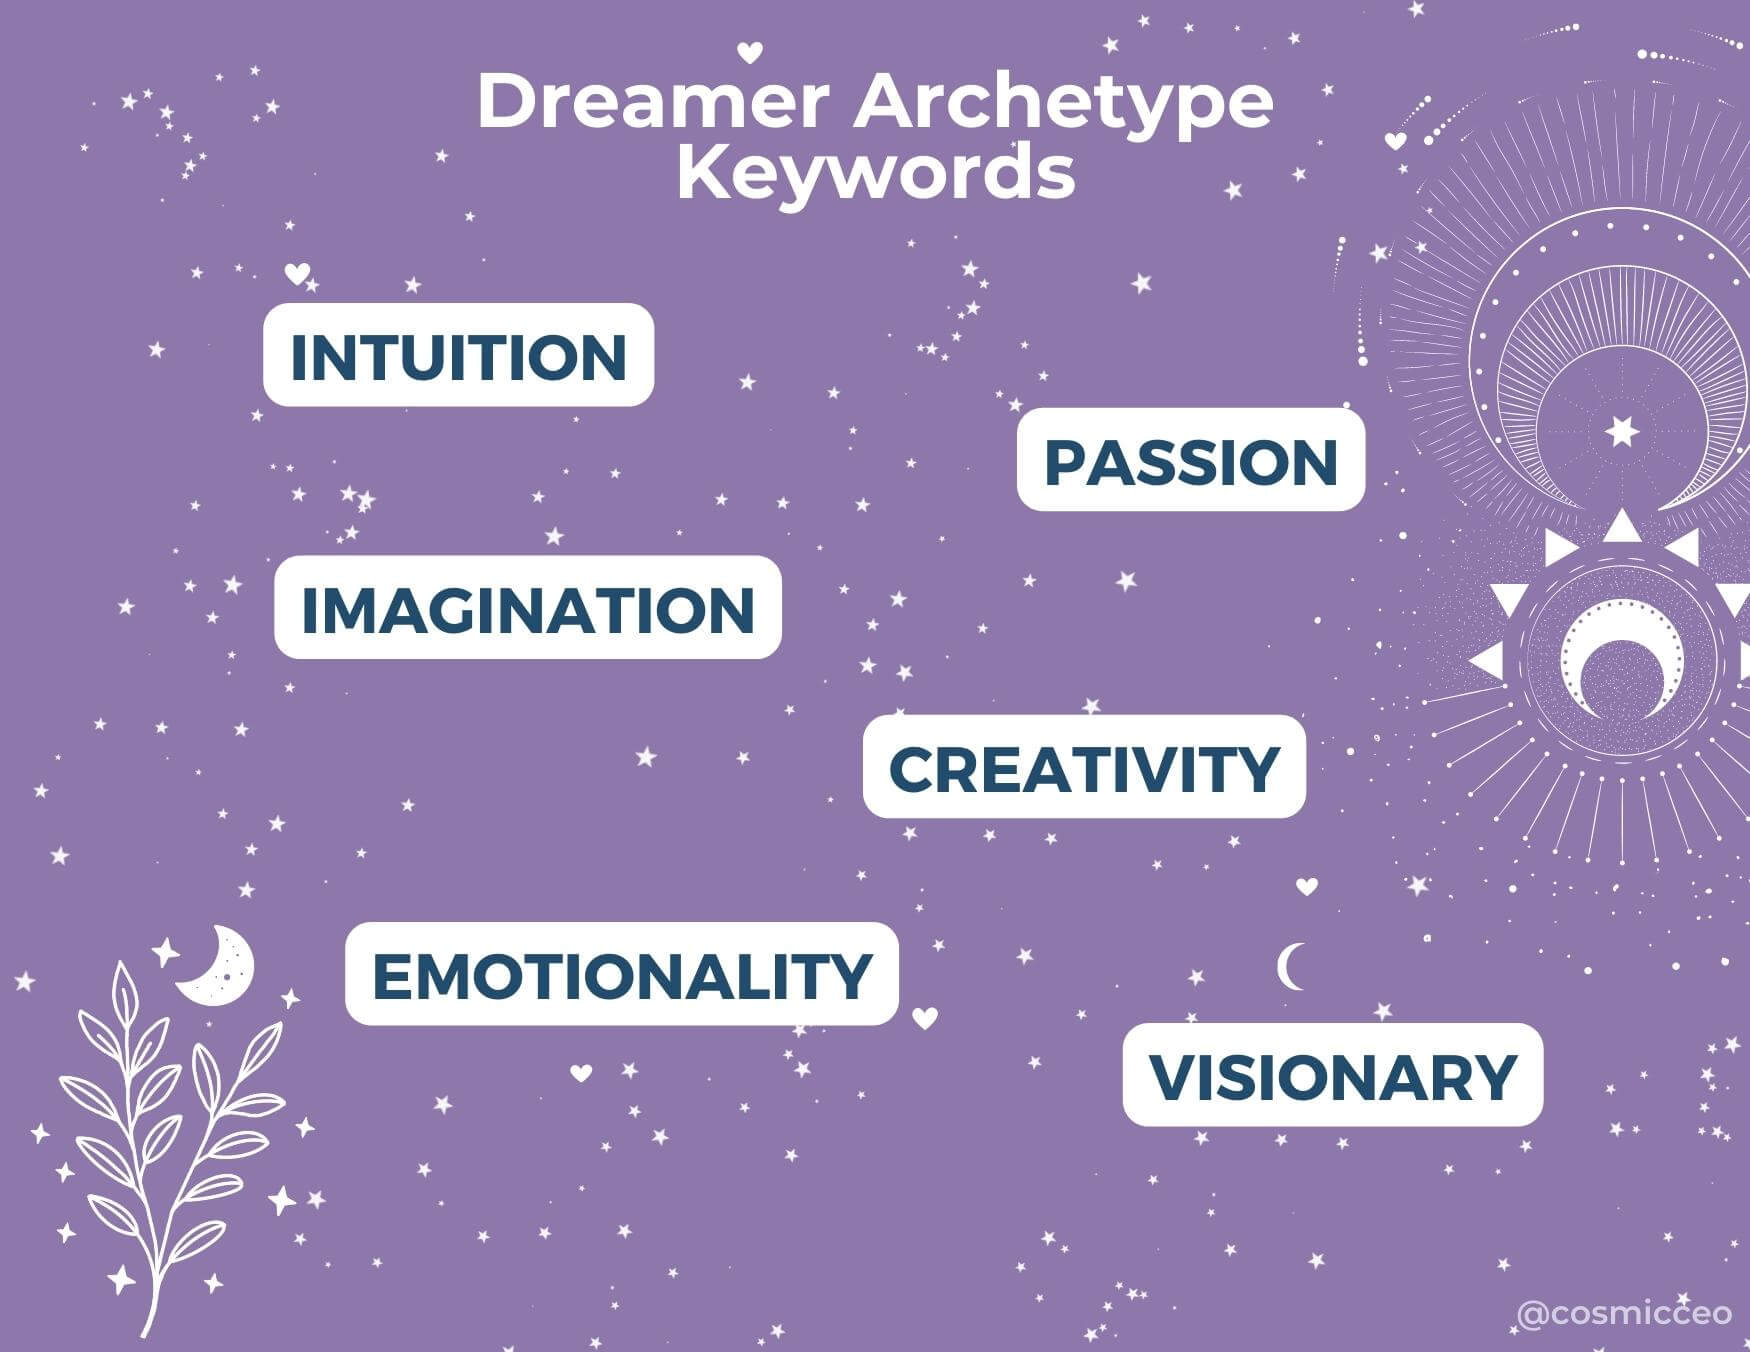 Cosmic CEO Archetypes | Dreamer Keywords